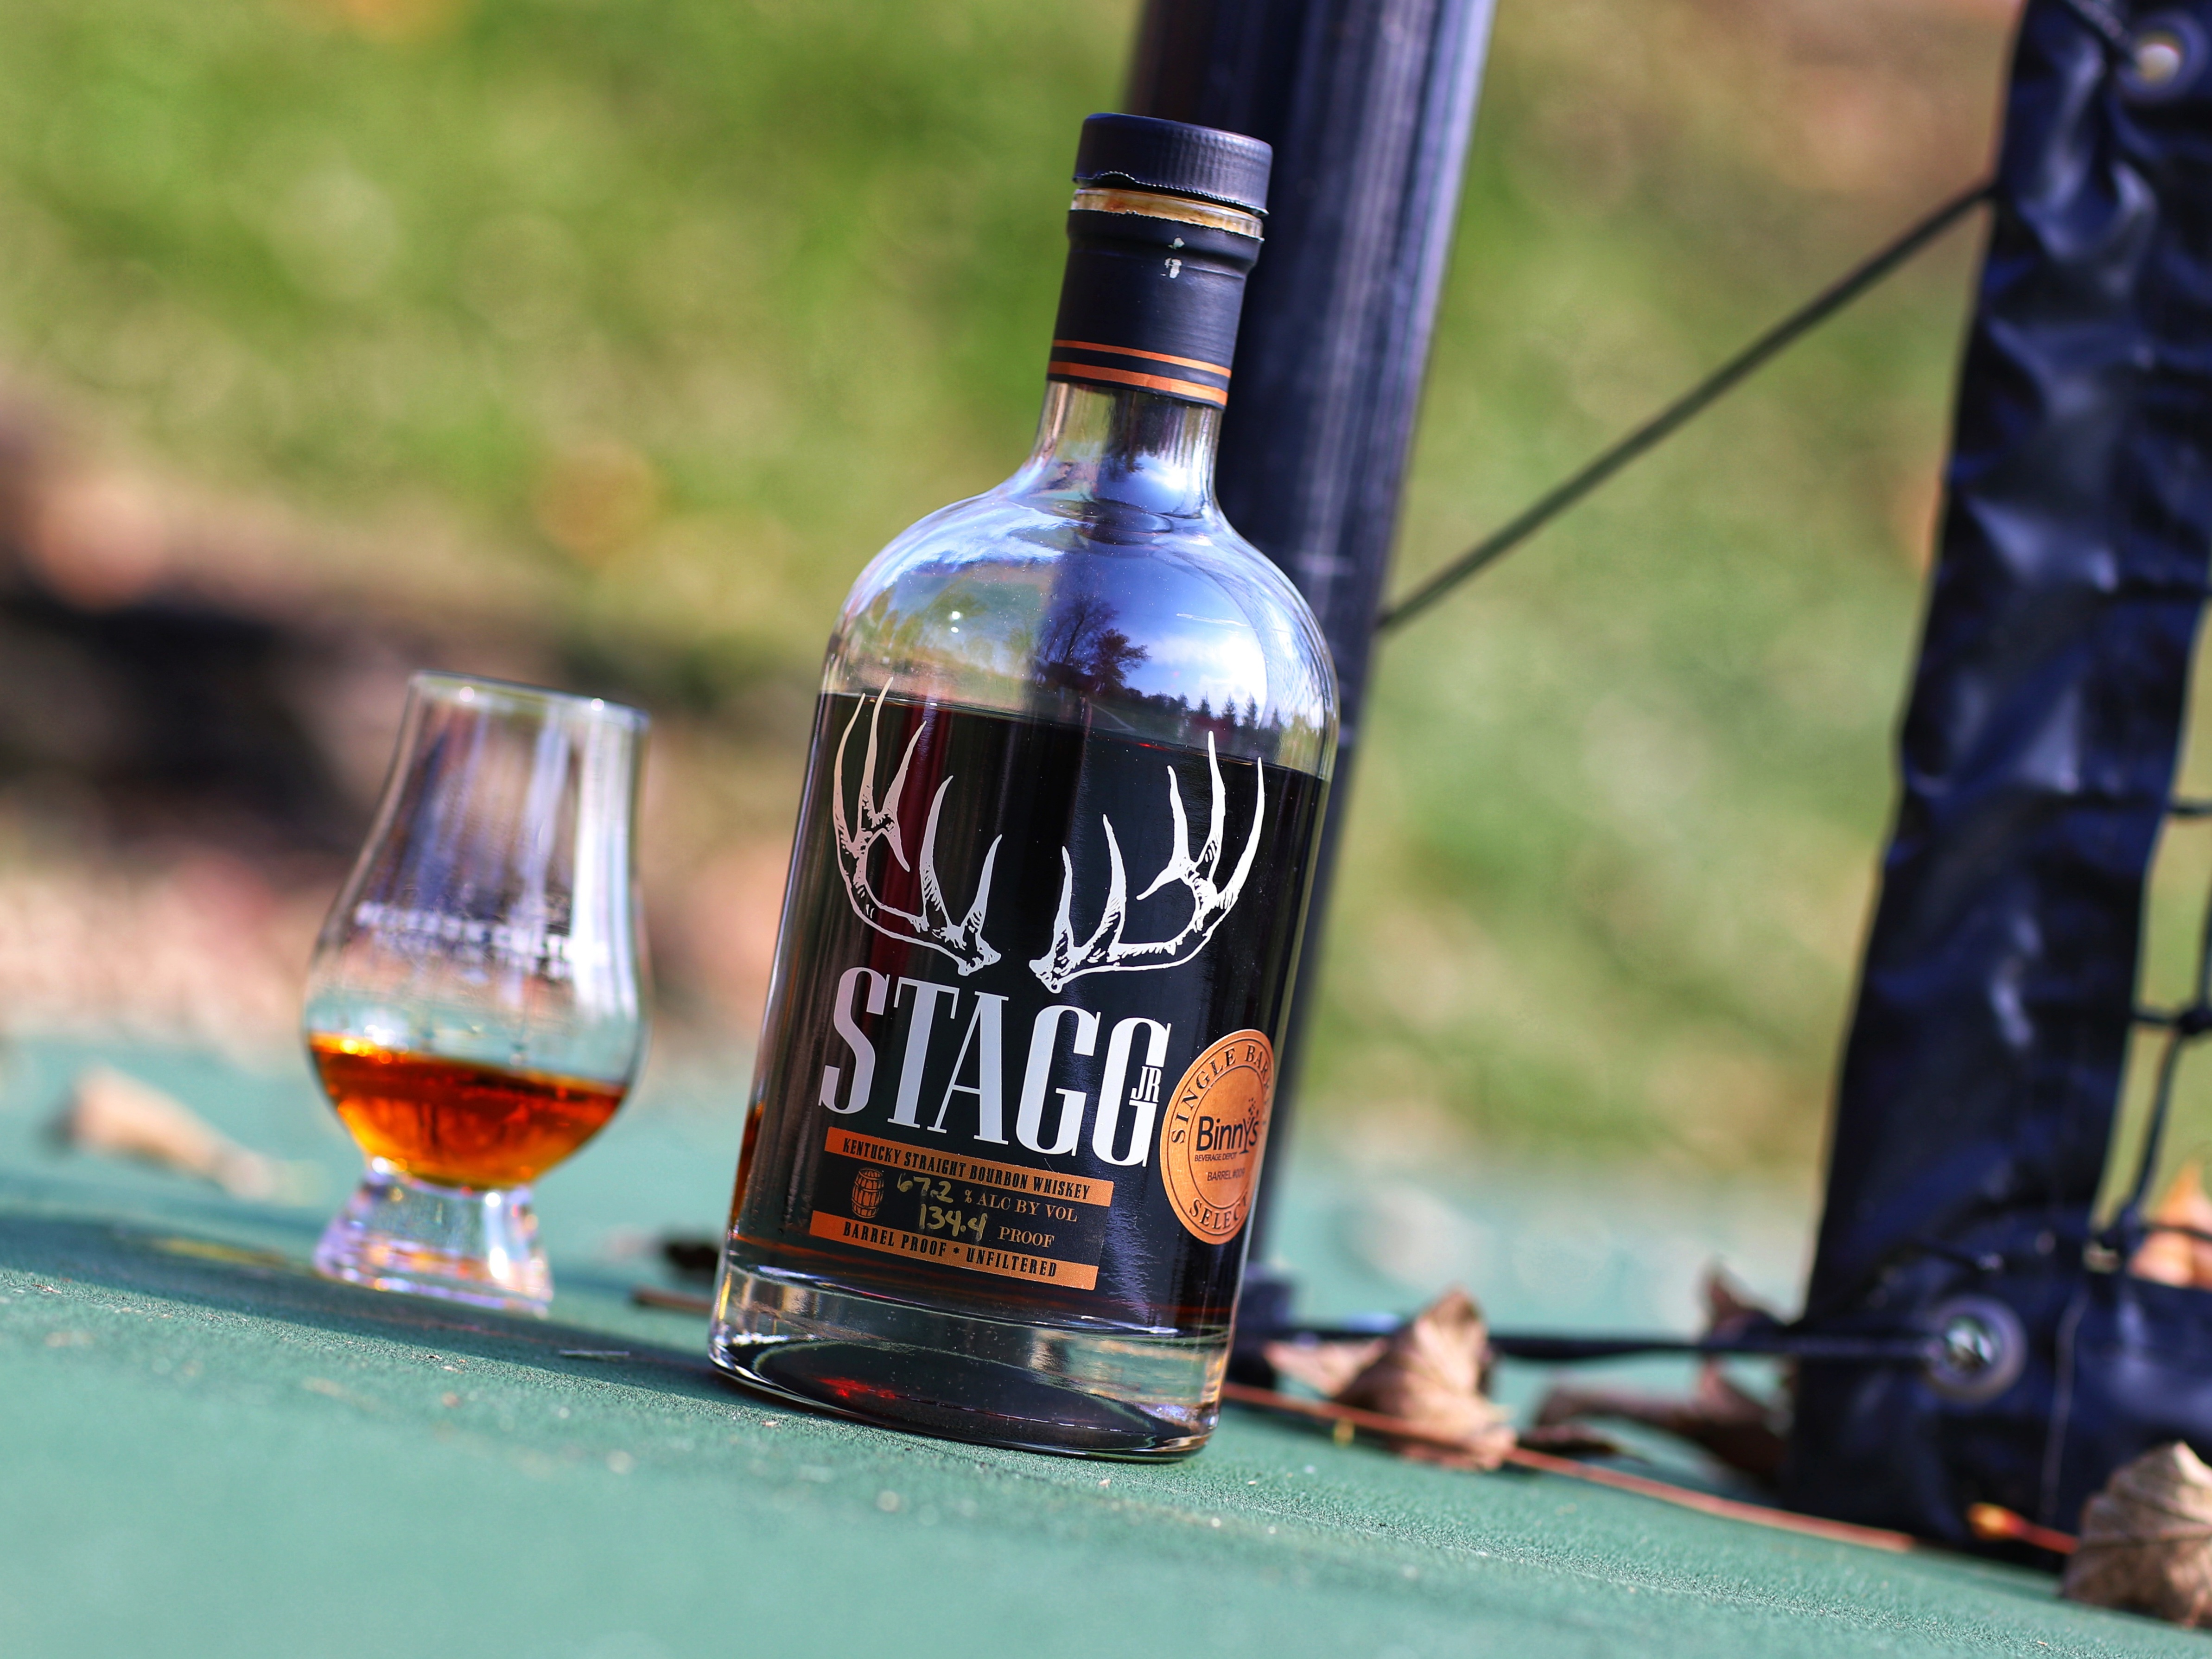 Stagg Jr Single Barrel Bourbon (Binny’s Barrel #009)